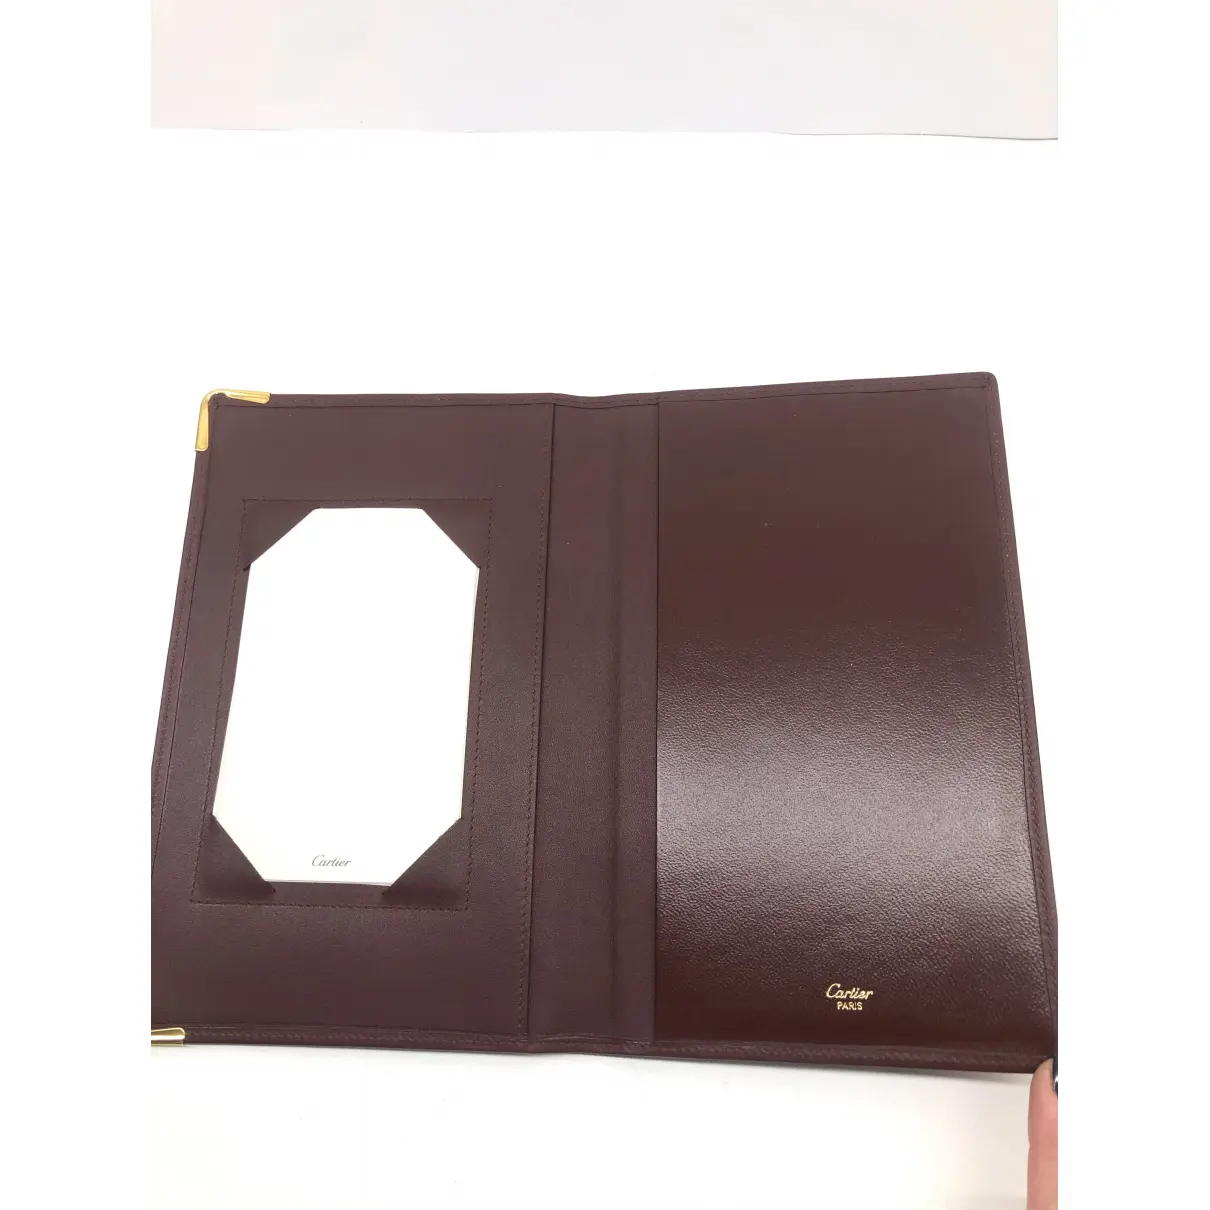 Buy Cartier Leather purse online